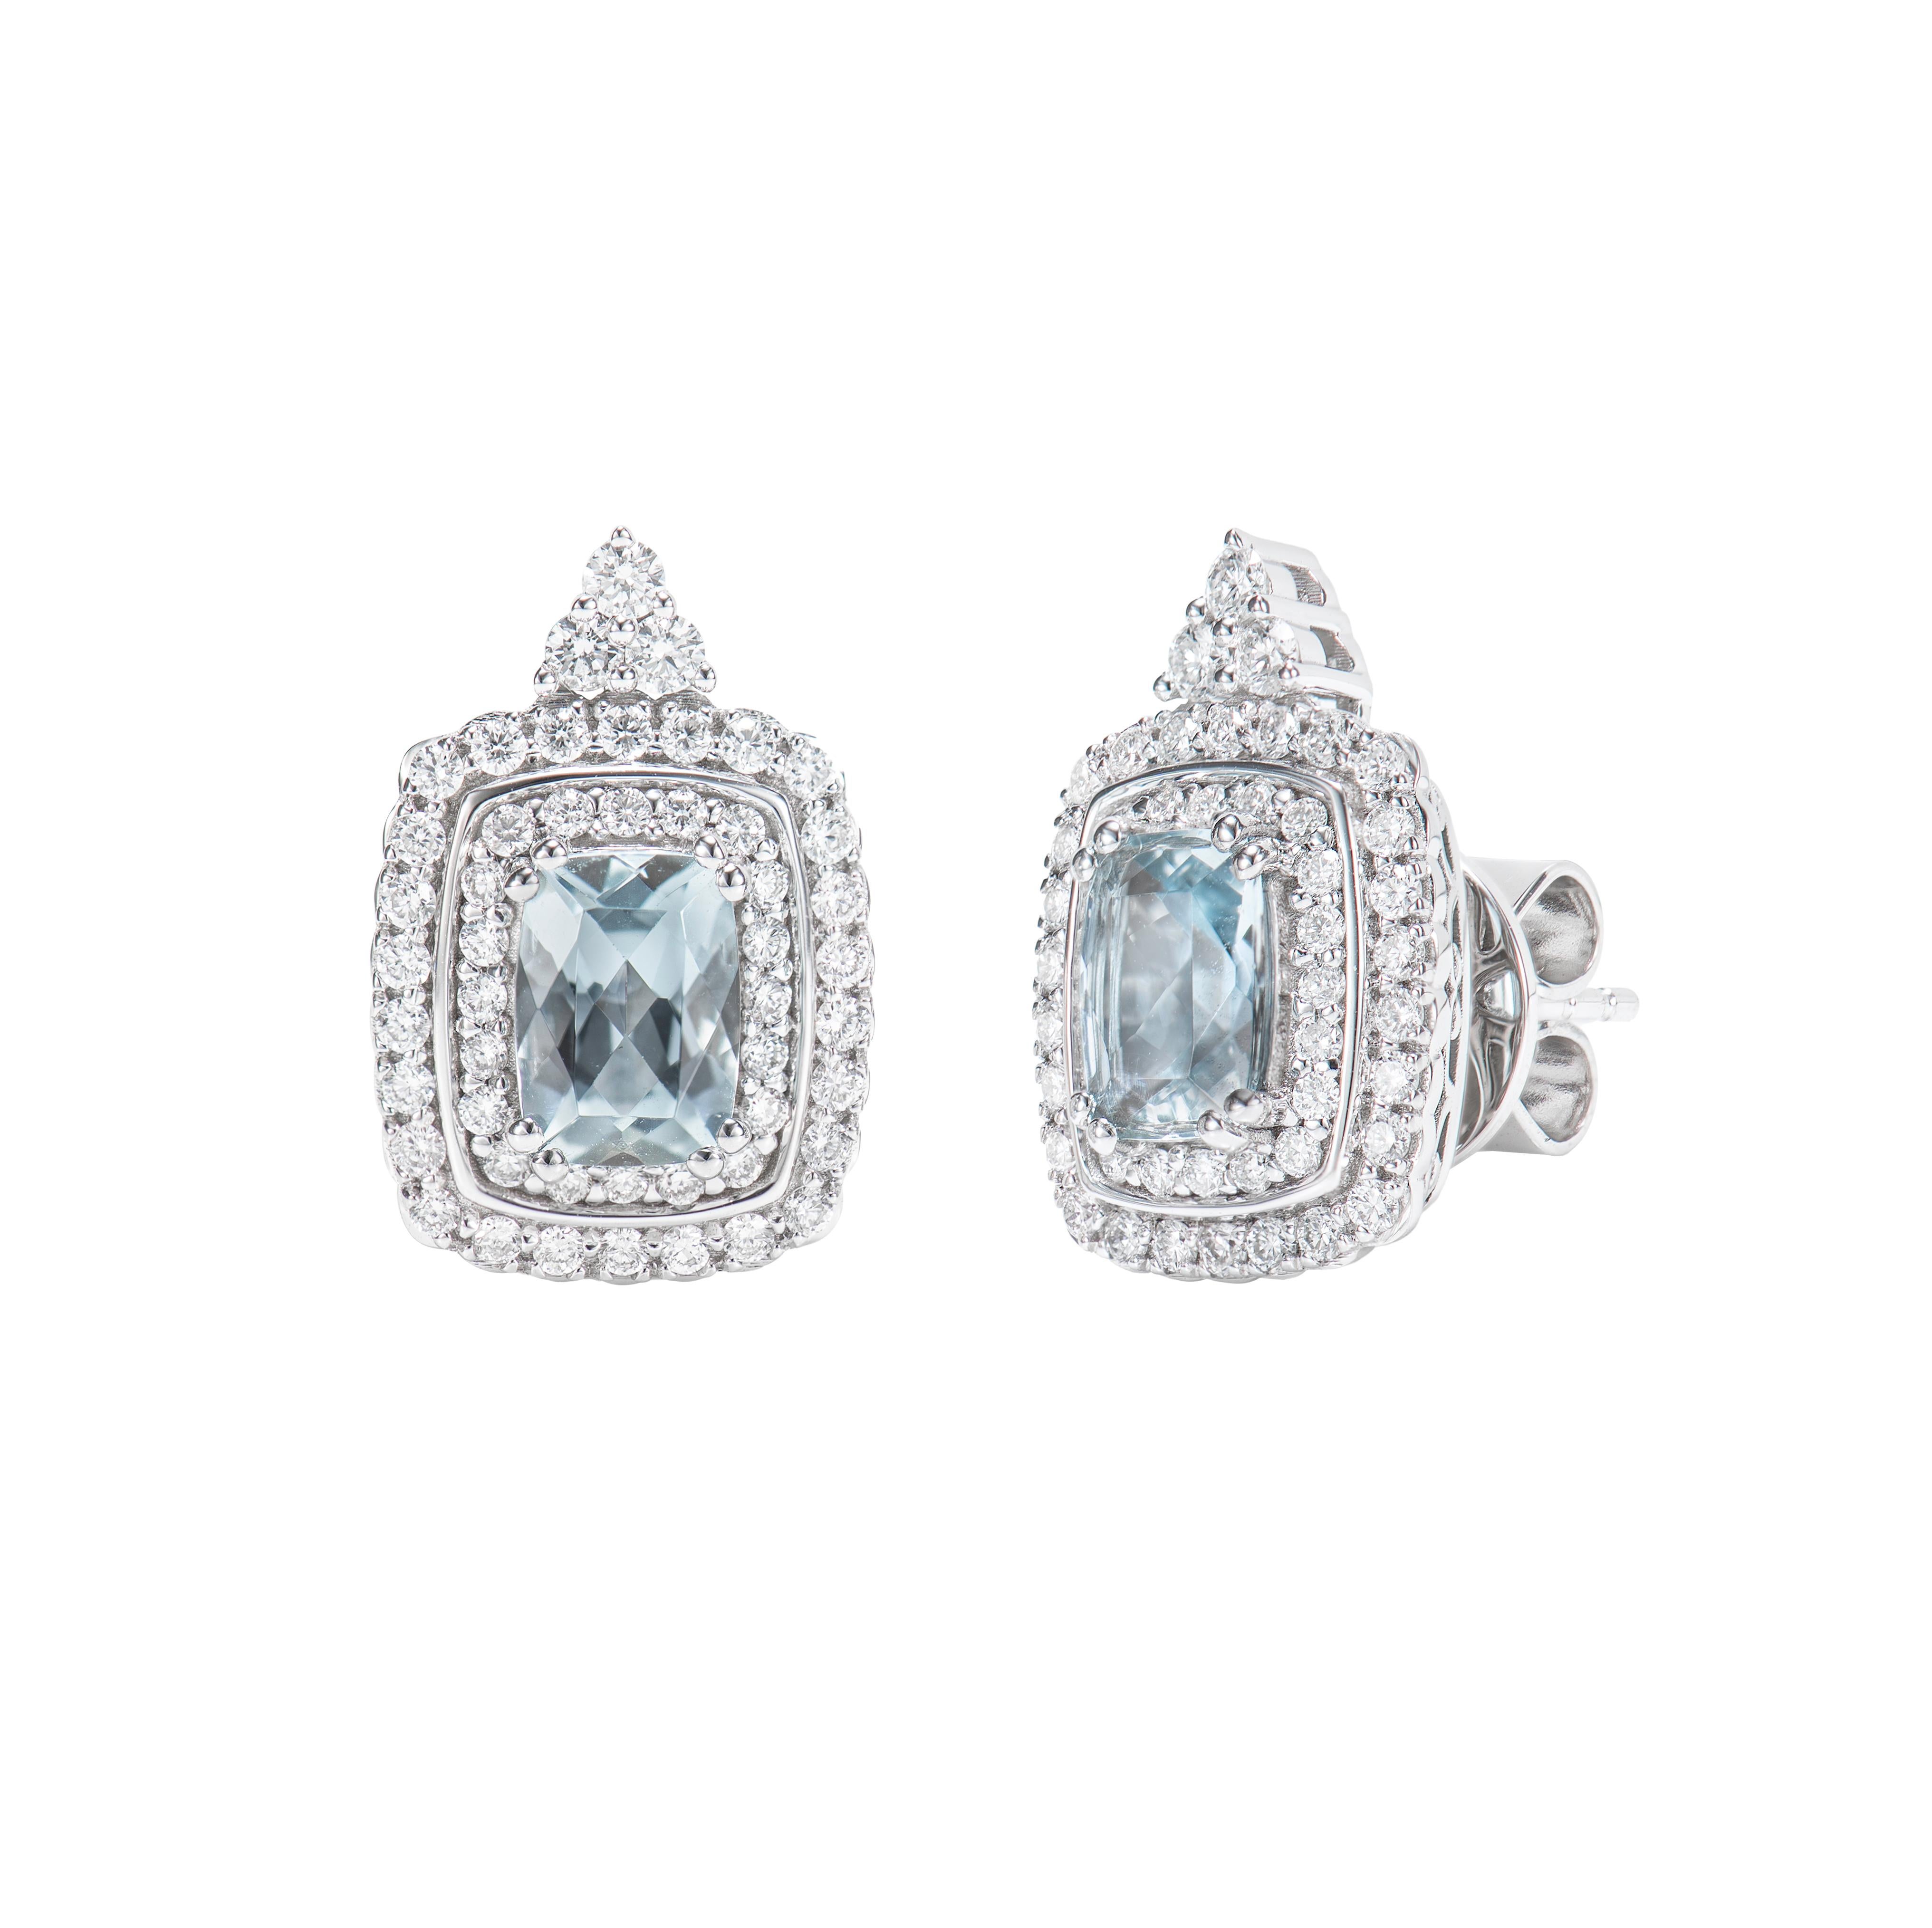 Cushion Cut Aquamarine and White Diamond Studs Earring in 18 Karat White Gold For Sale